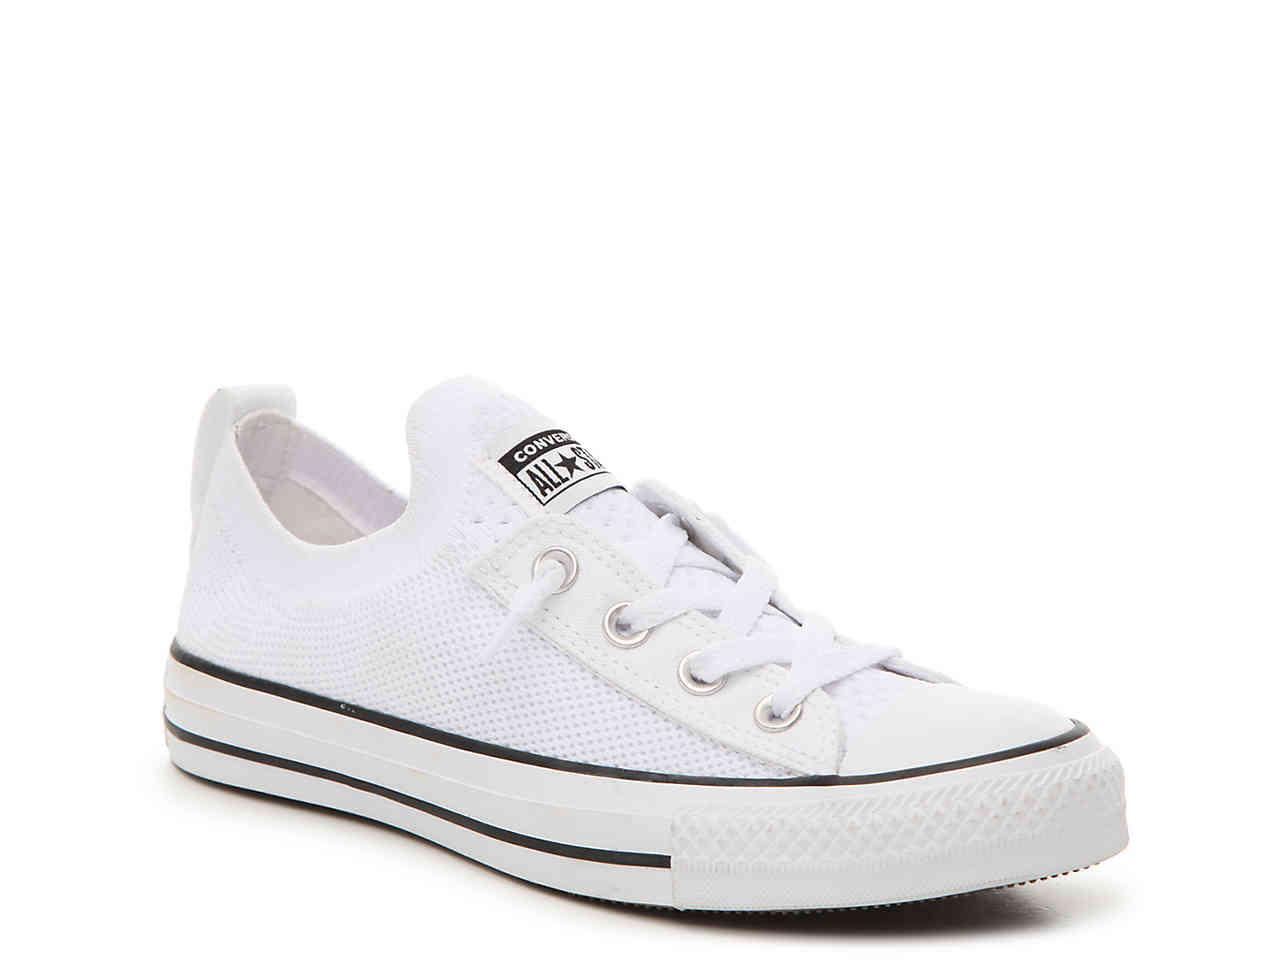 Converse Chuck Taylor All Star Shoreline Knit Slip-on Sneaker in White ...